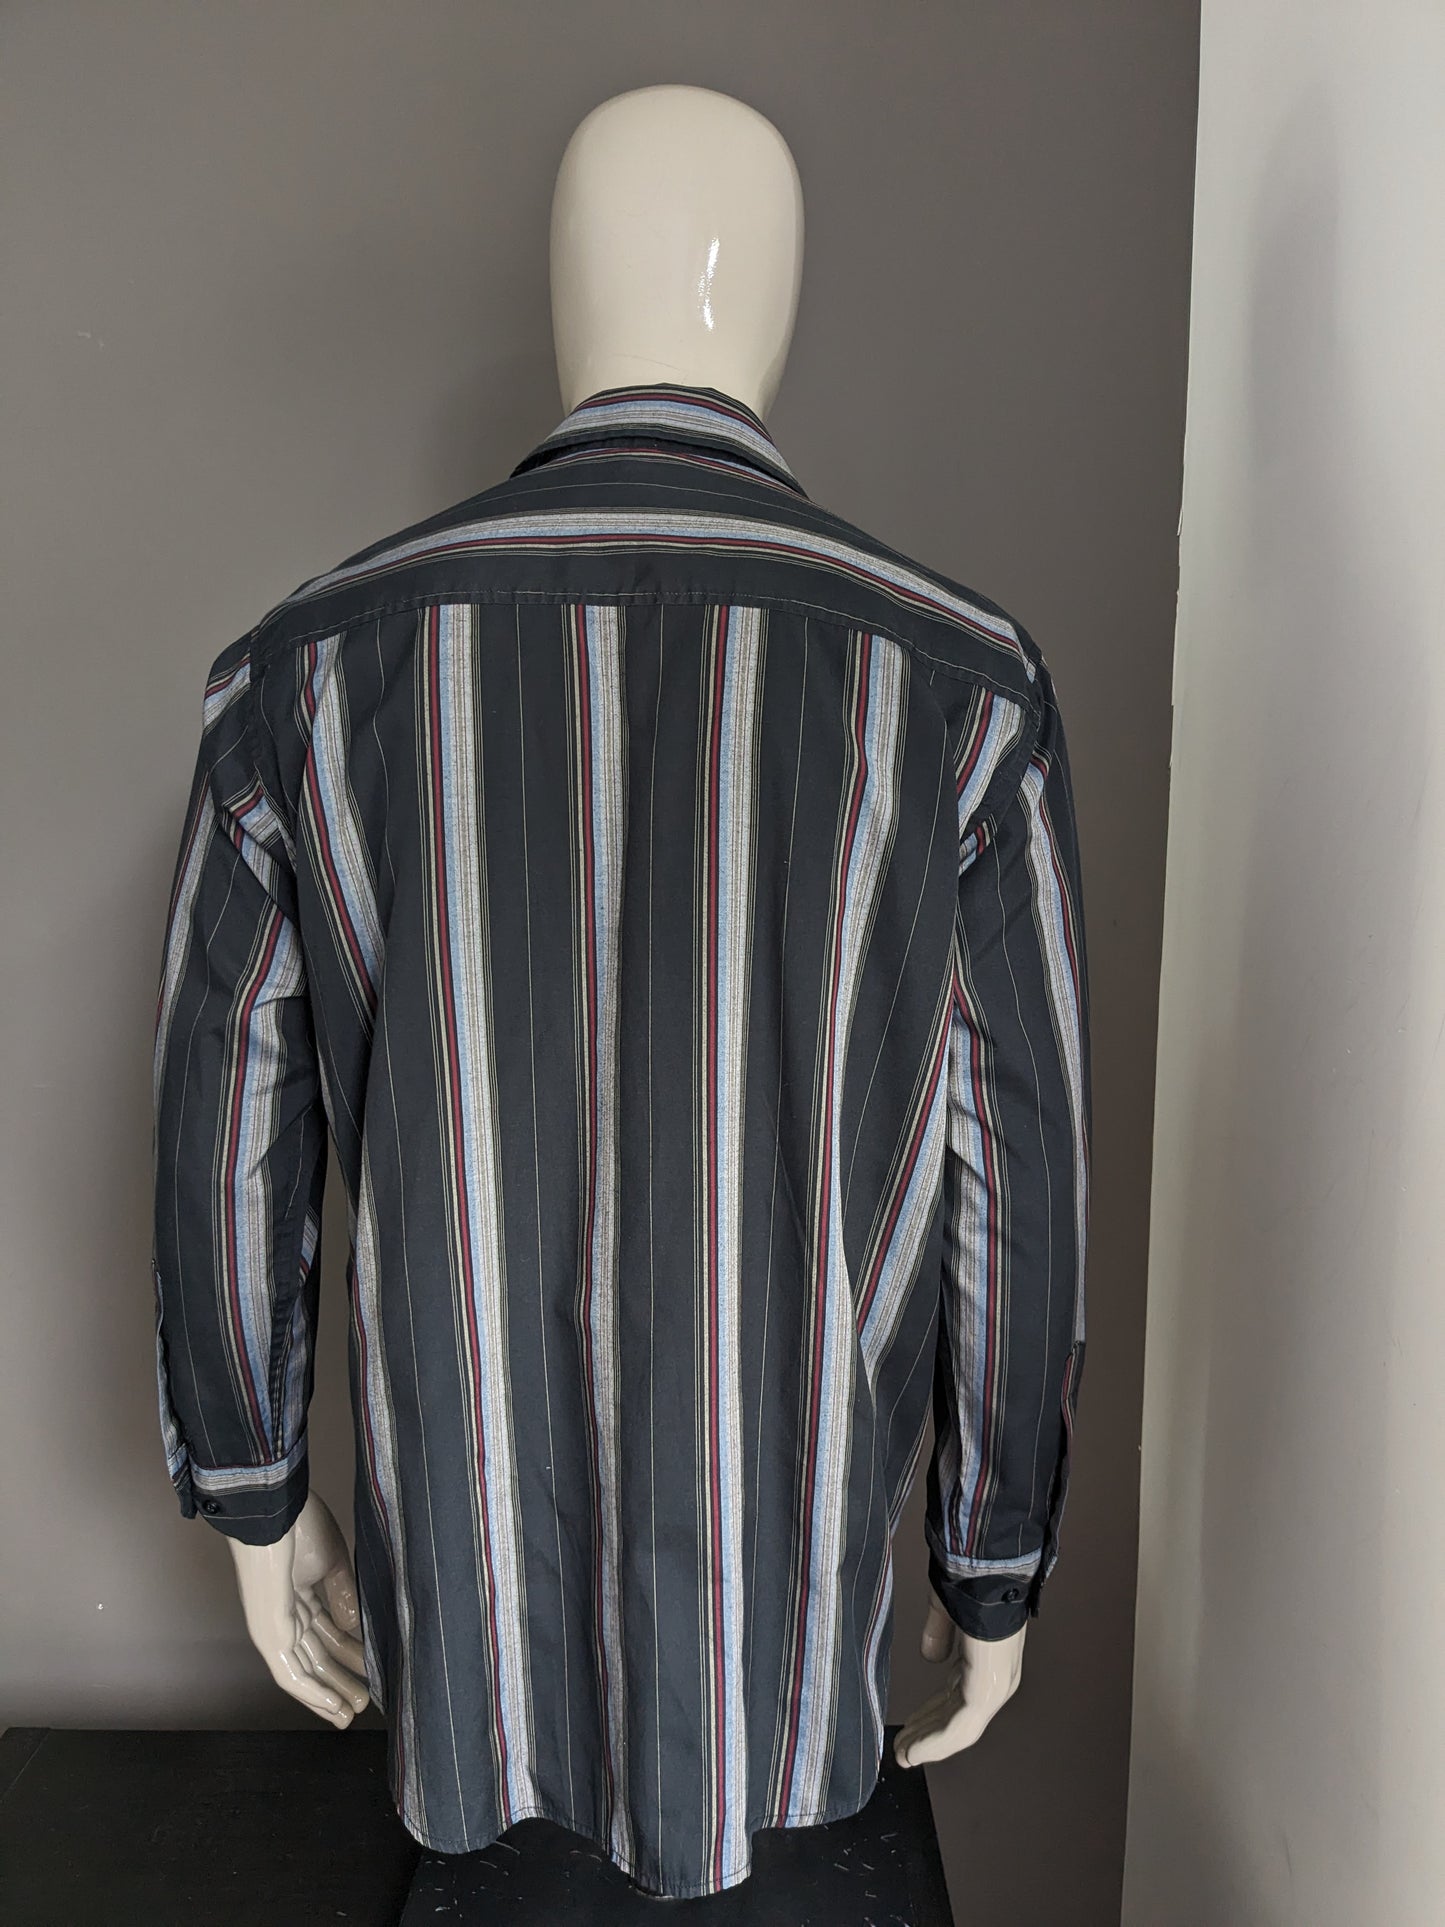 Vintage NPO No Problems Shirt. Black red blue gray striped. Size 2XL / XXL.